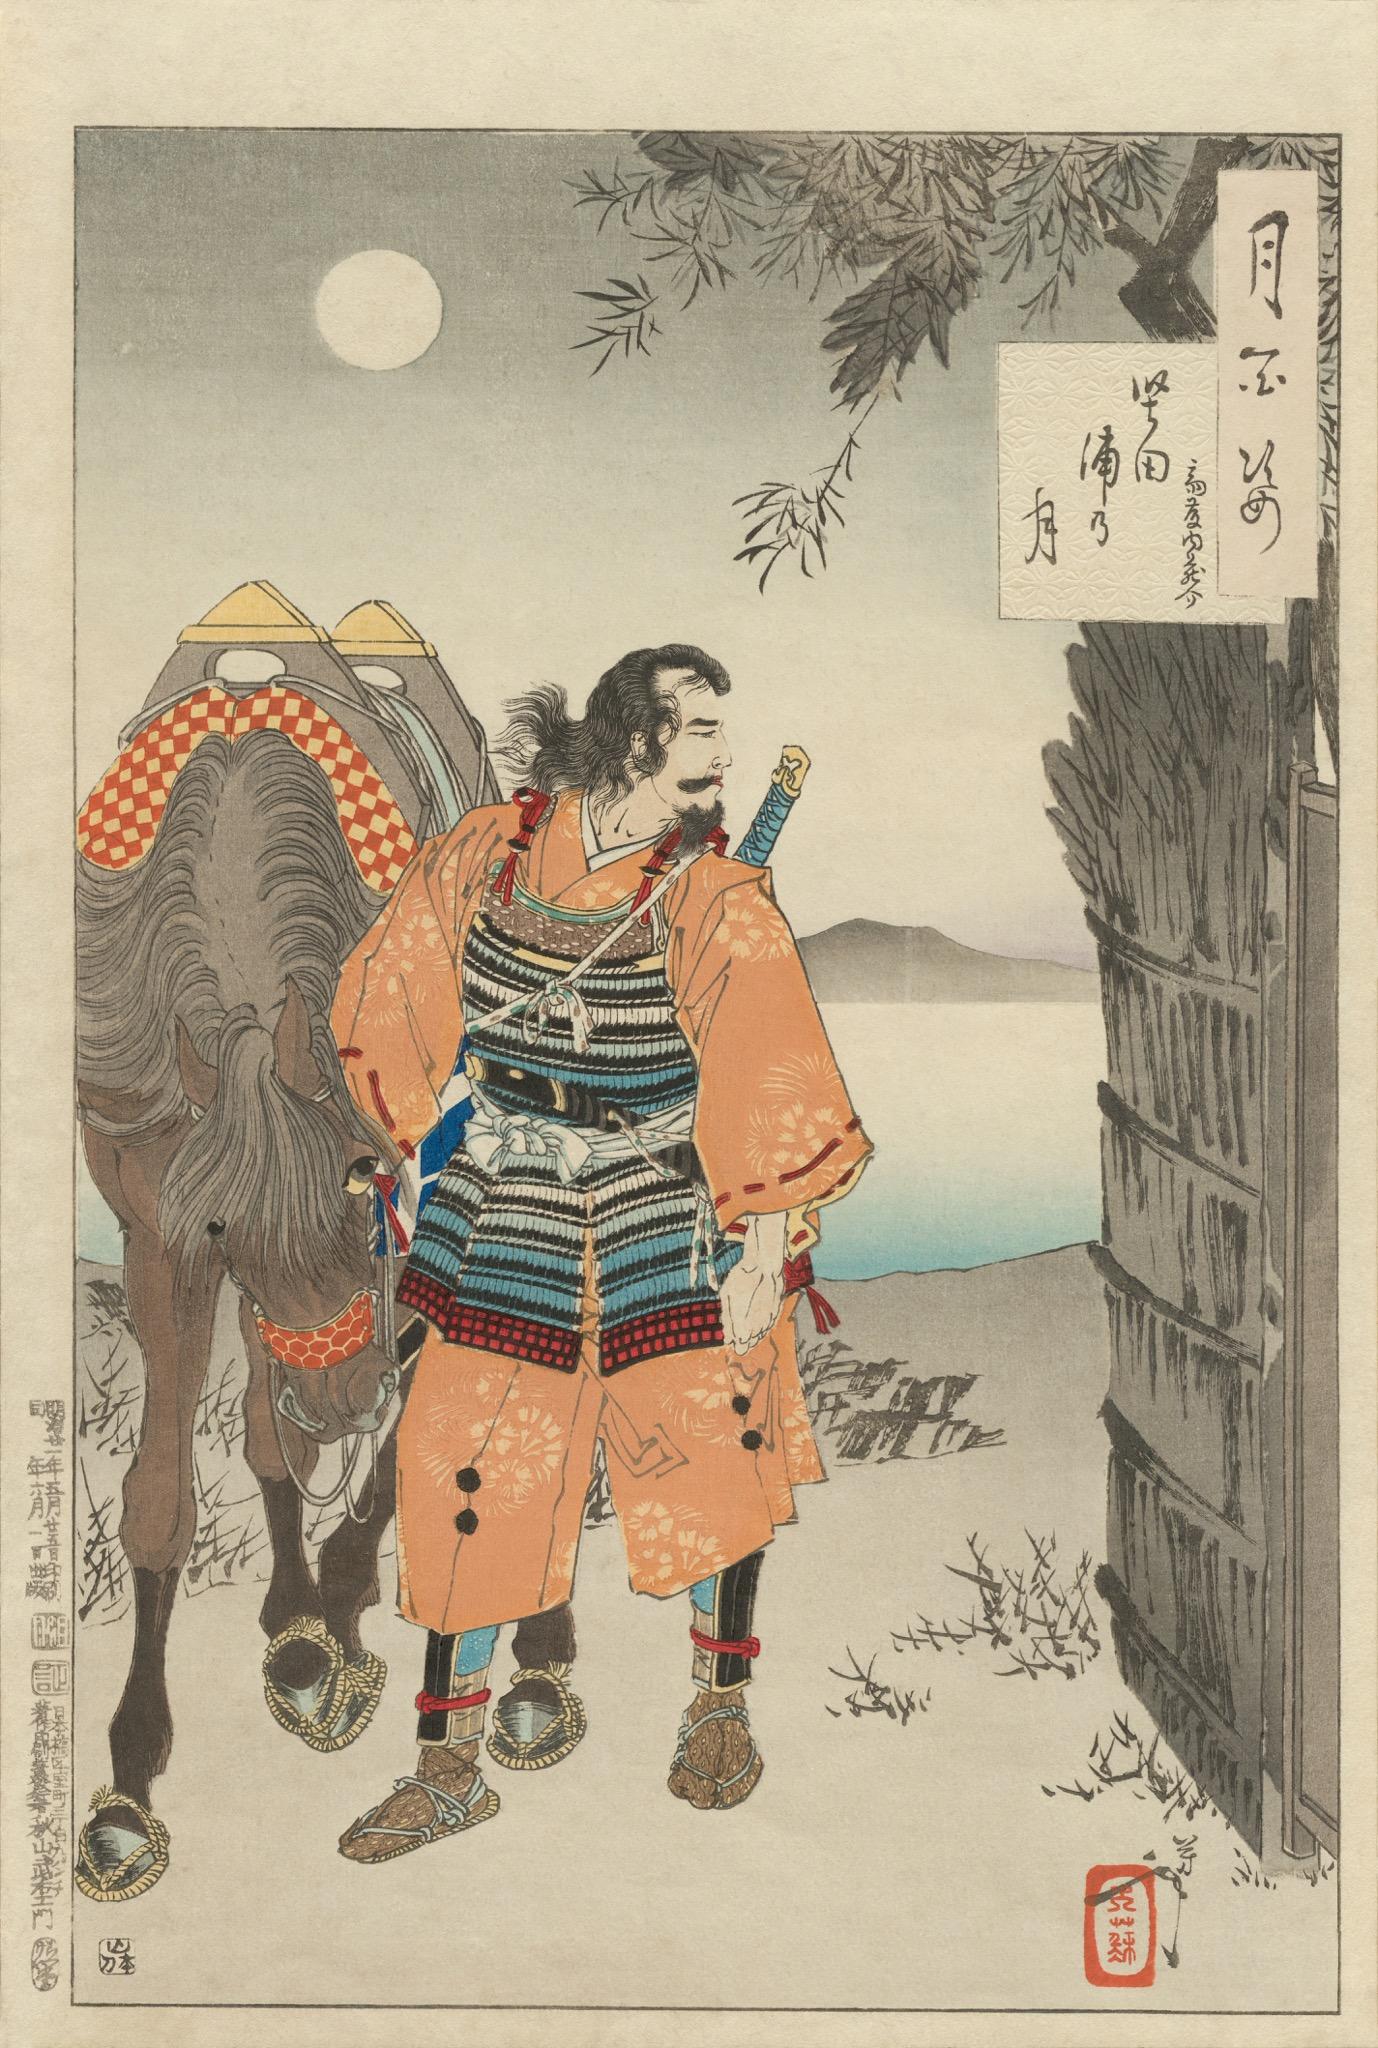 This is aa original Yoshitoshi print of a Japanese Meiji era ukiyo-e (woodblock print) titled 